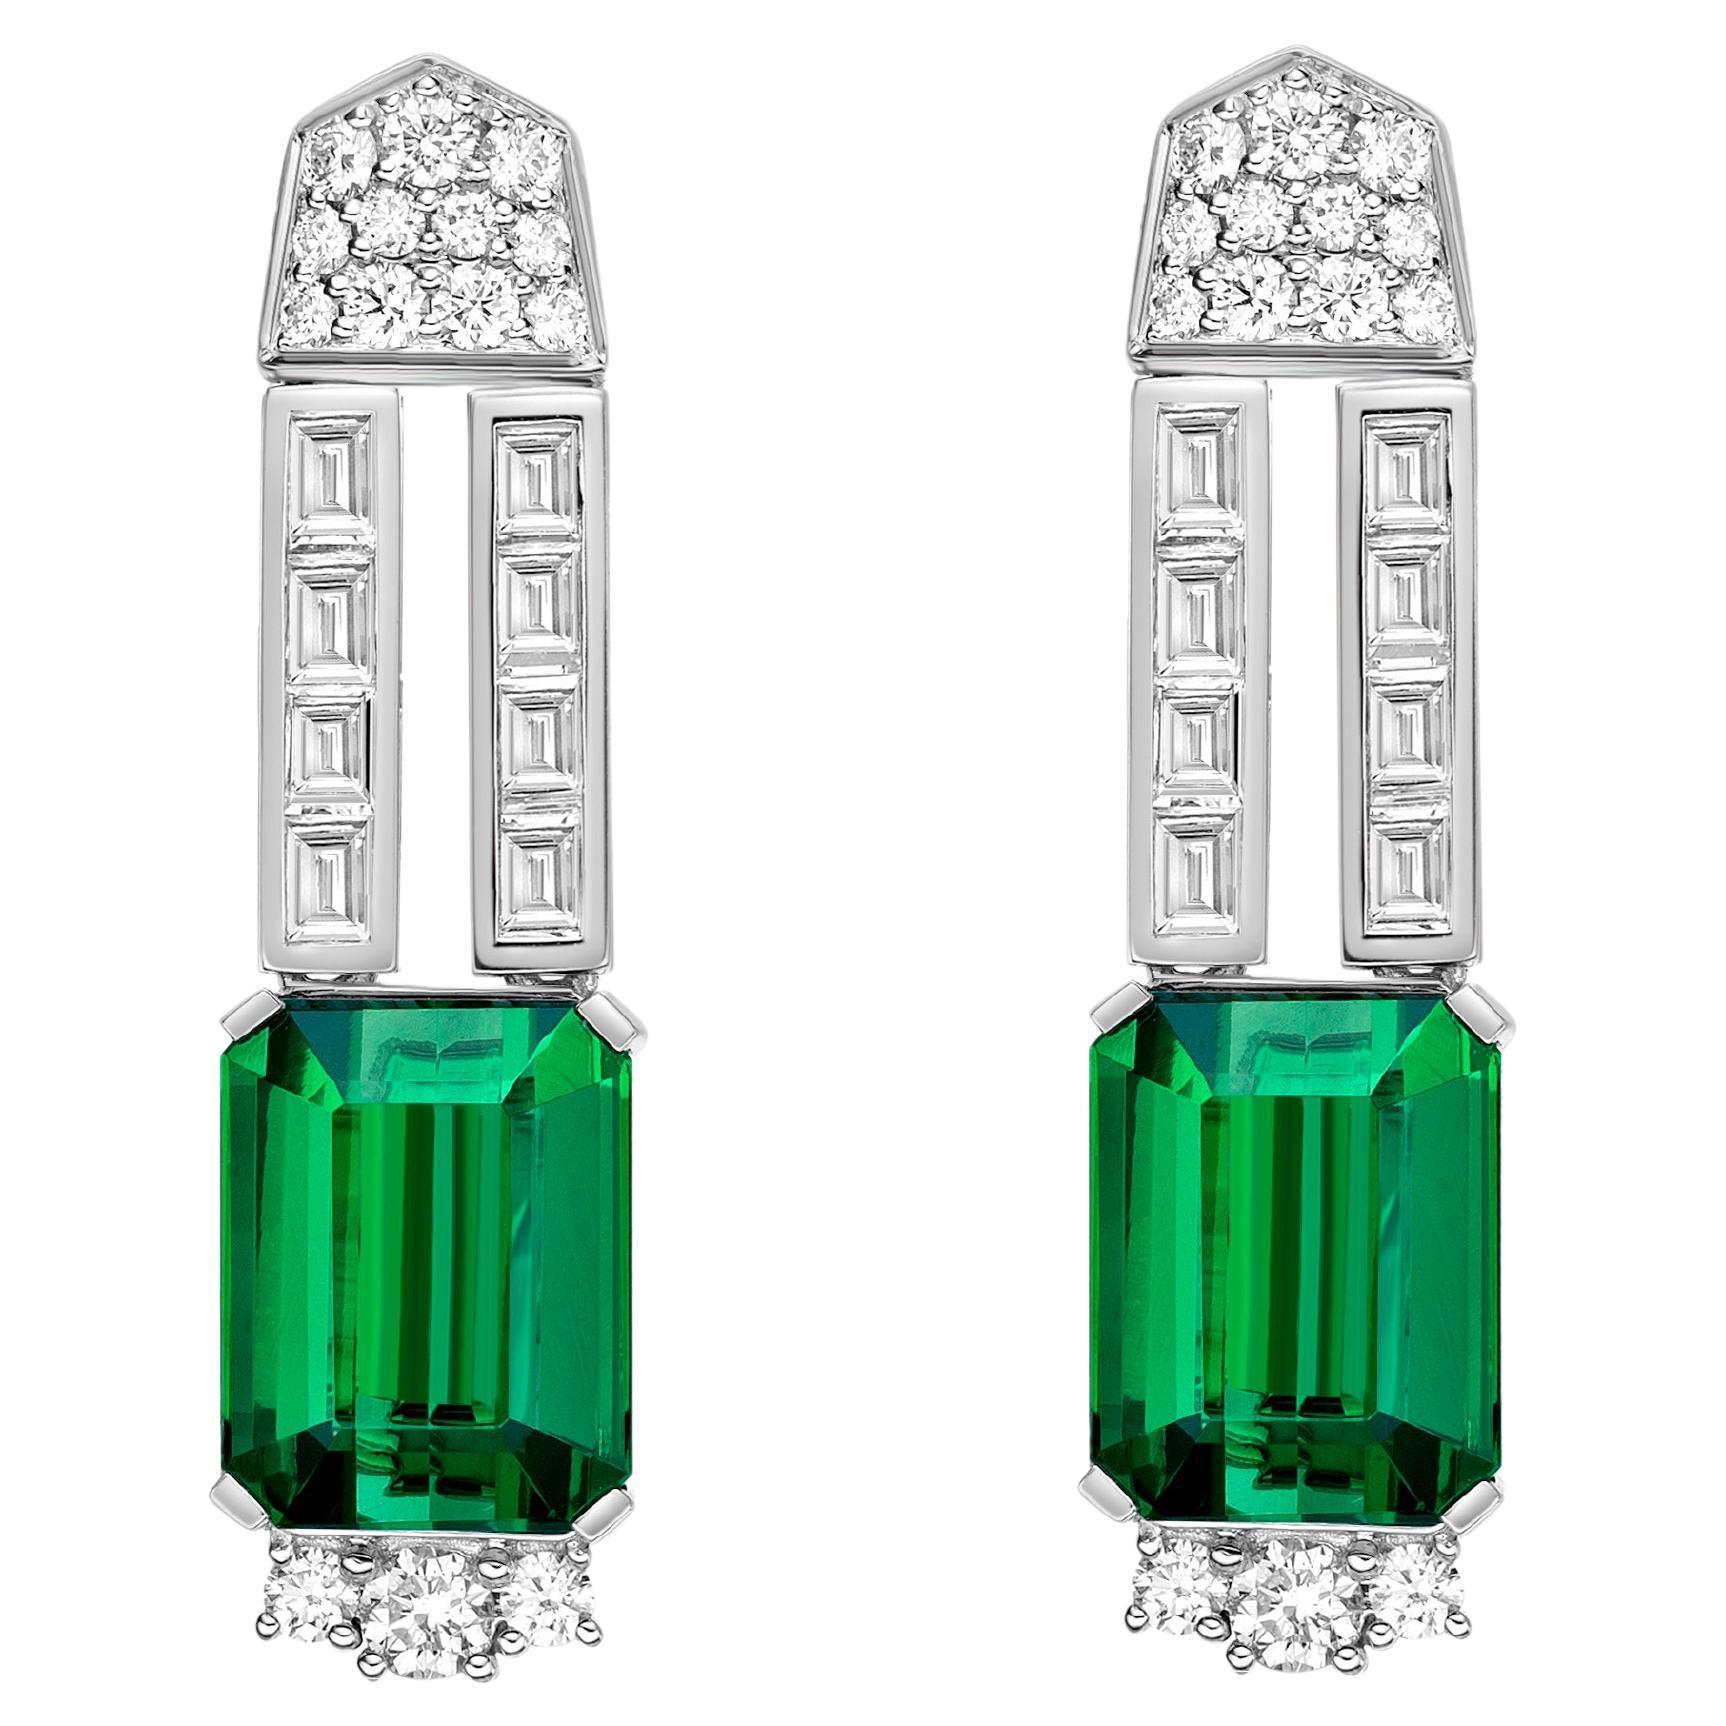 13.13 Carat Green Tourmaline Drop Earrings in 18Karat White Gold with Diamond.